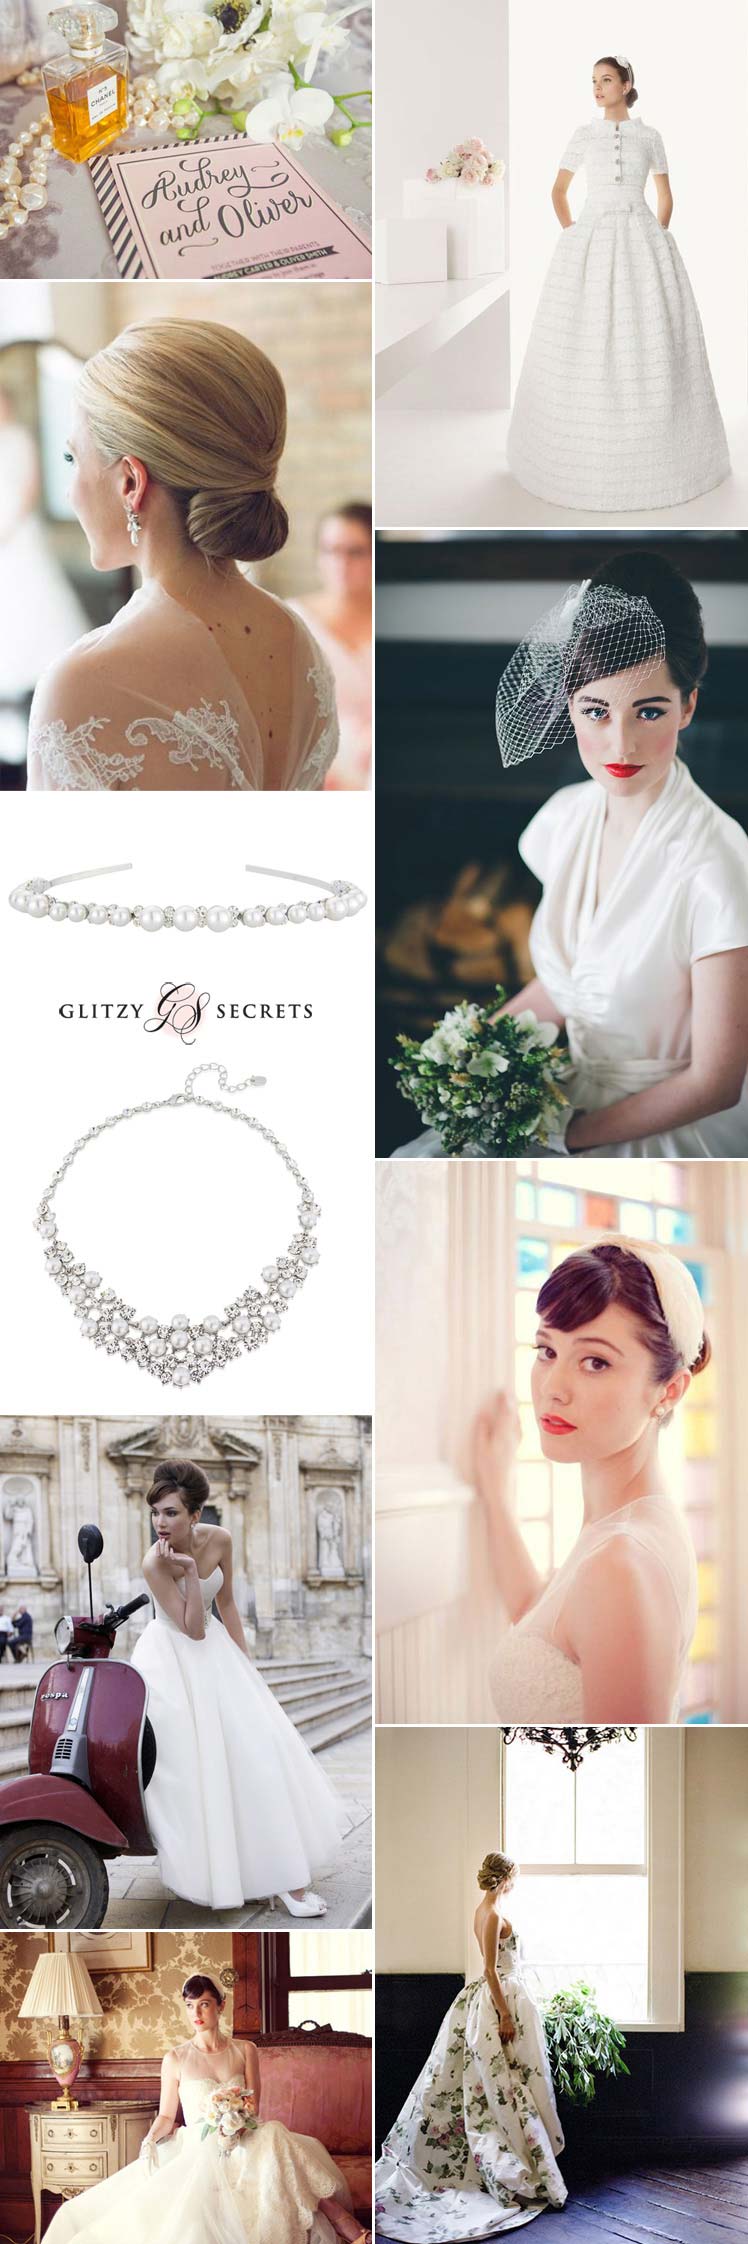 Audrey Hepburn bridal style inspiration